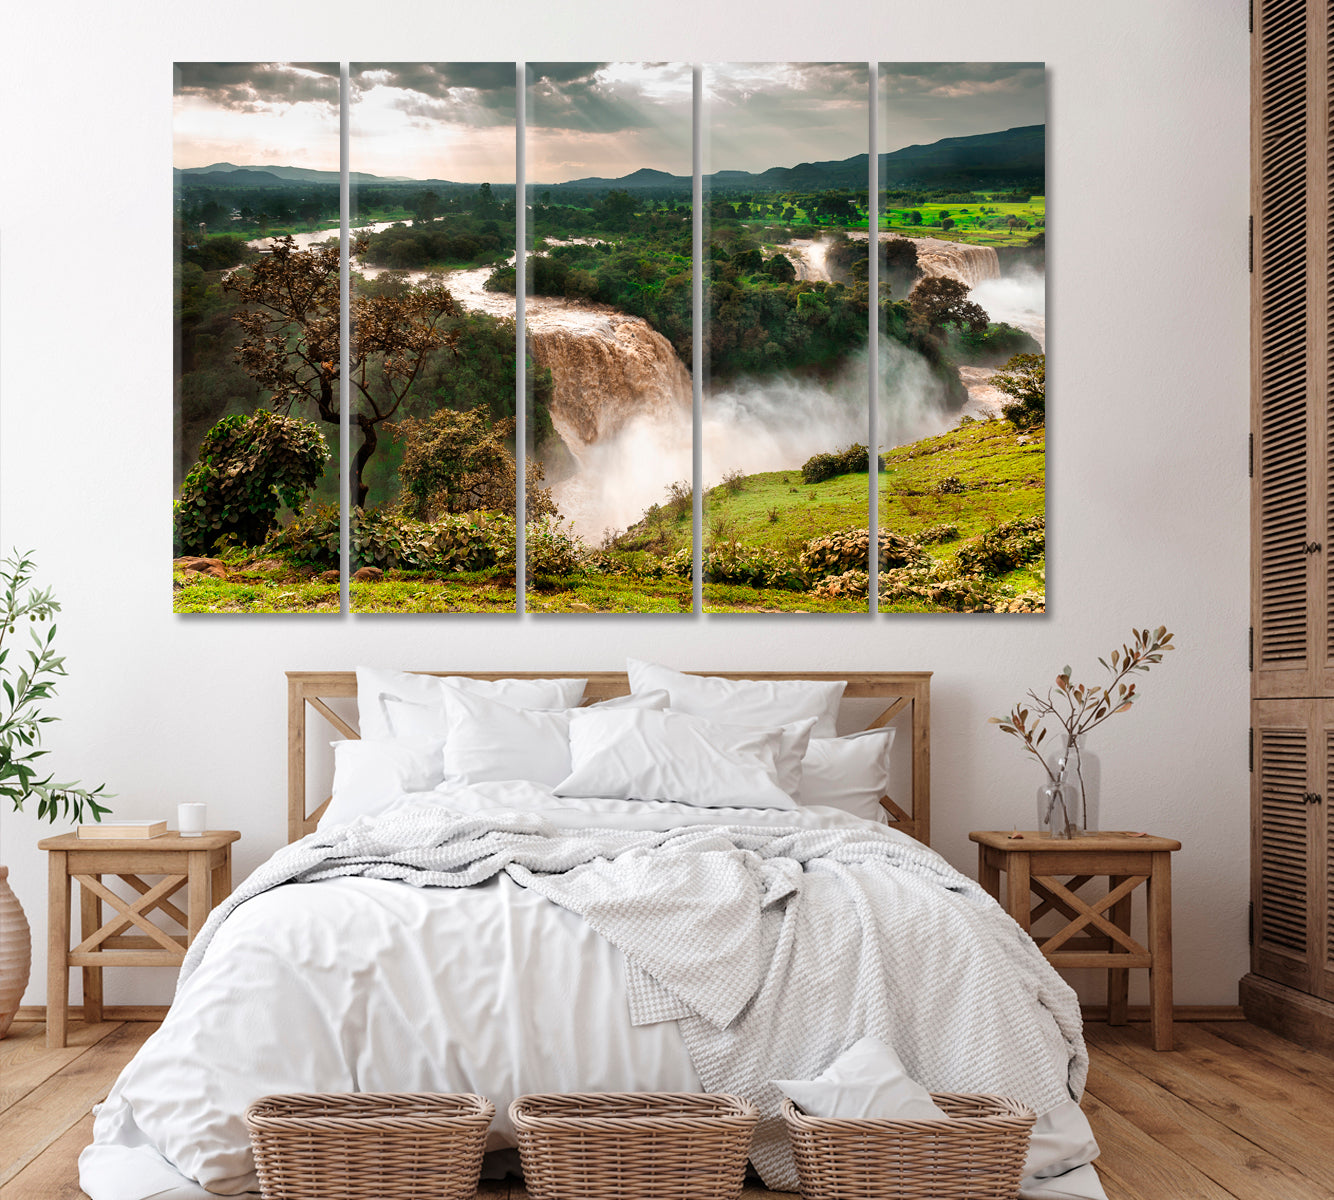 Blue Nile Falls Ethiopia Canvas Print ArtLexy 5 Panels 36"x24" inches 